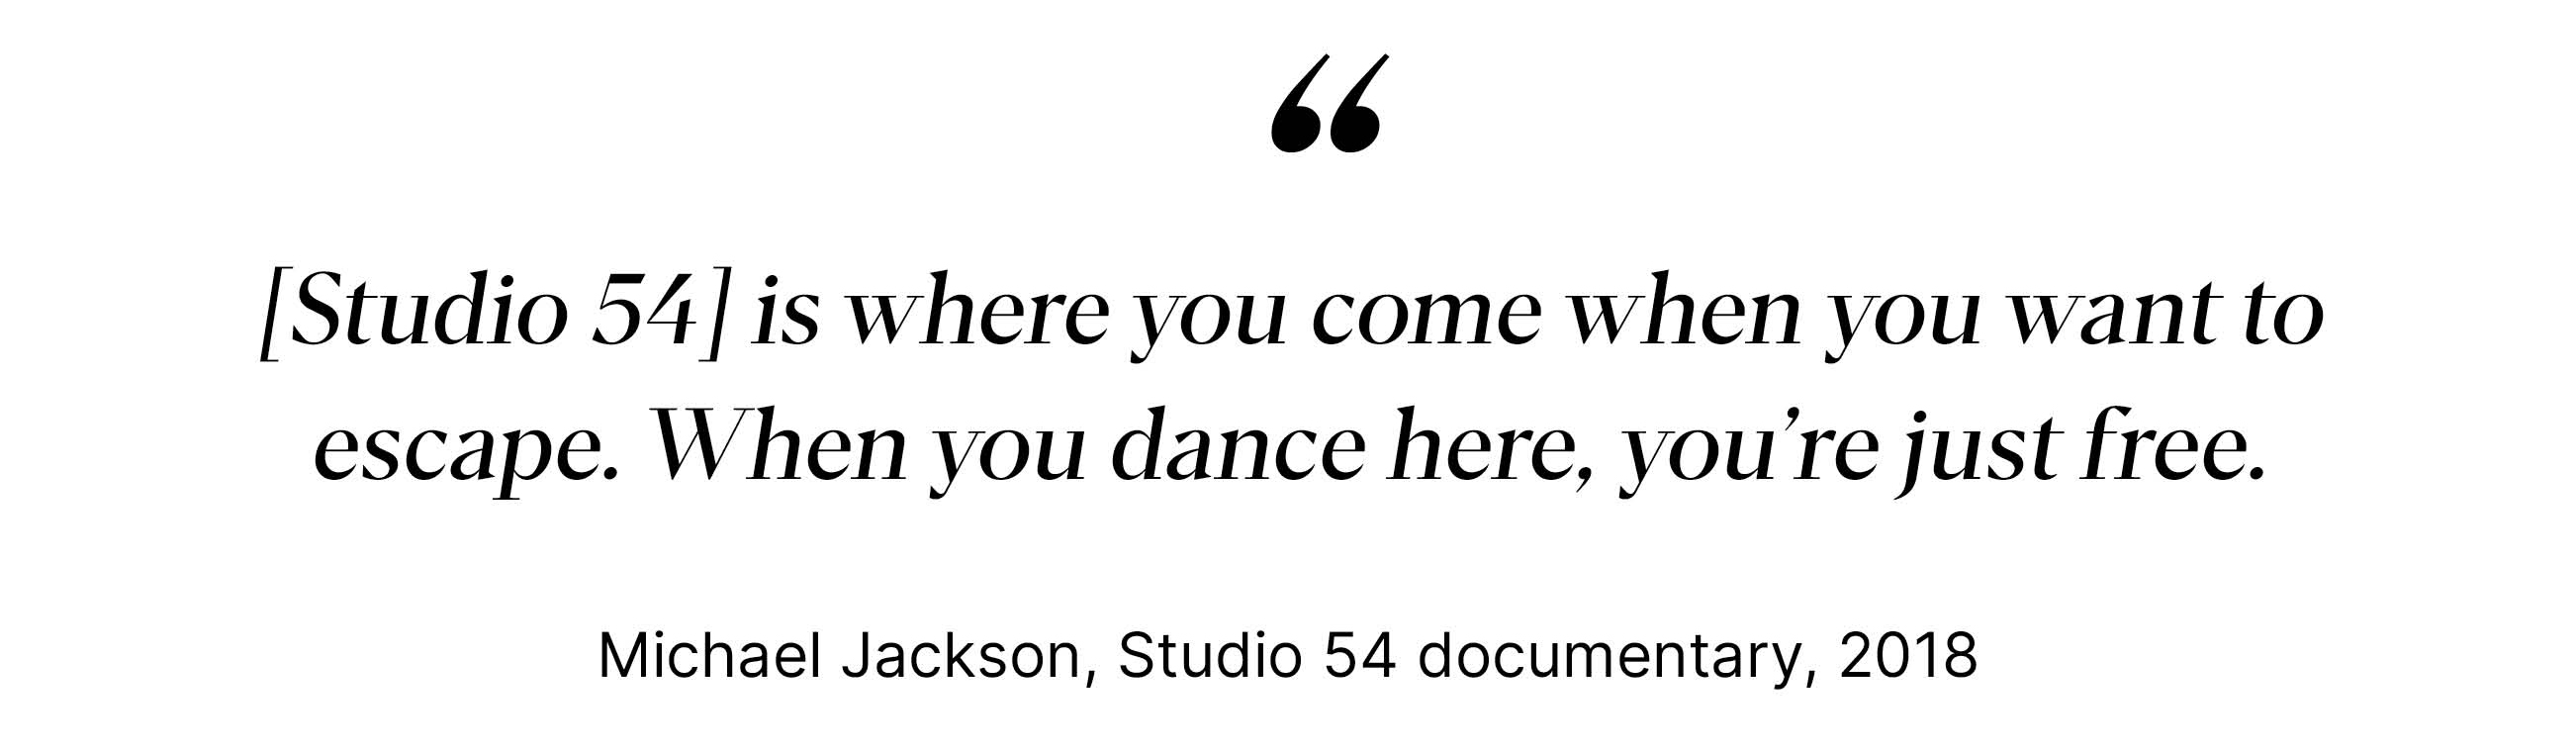 Studio 54 s where you come when you want to escape - Michael Jackson